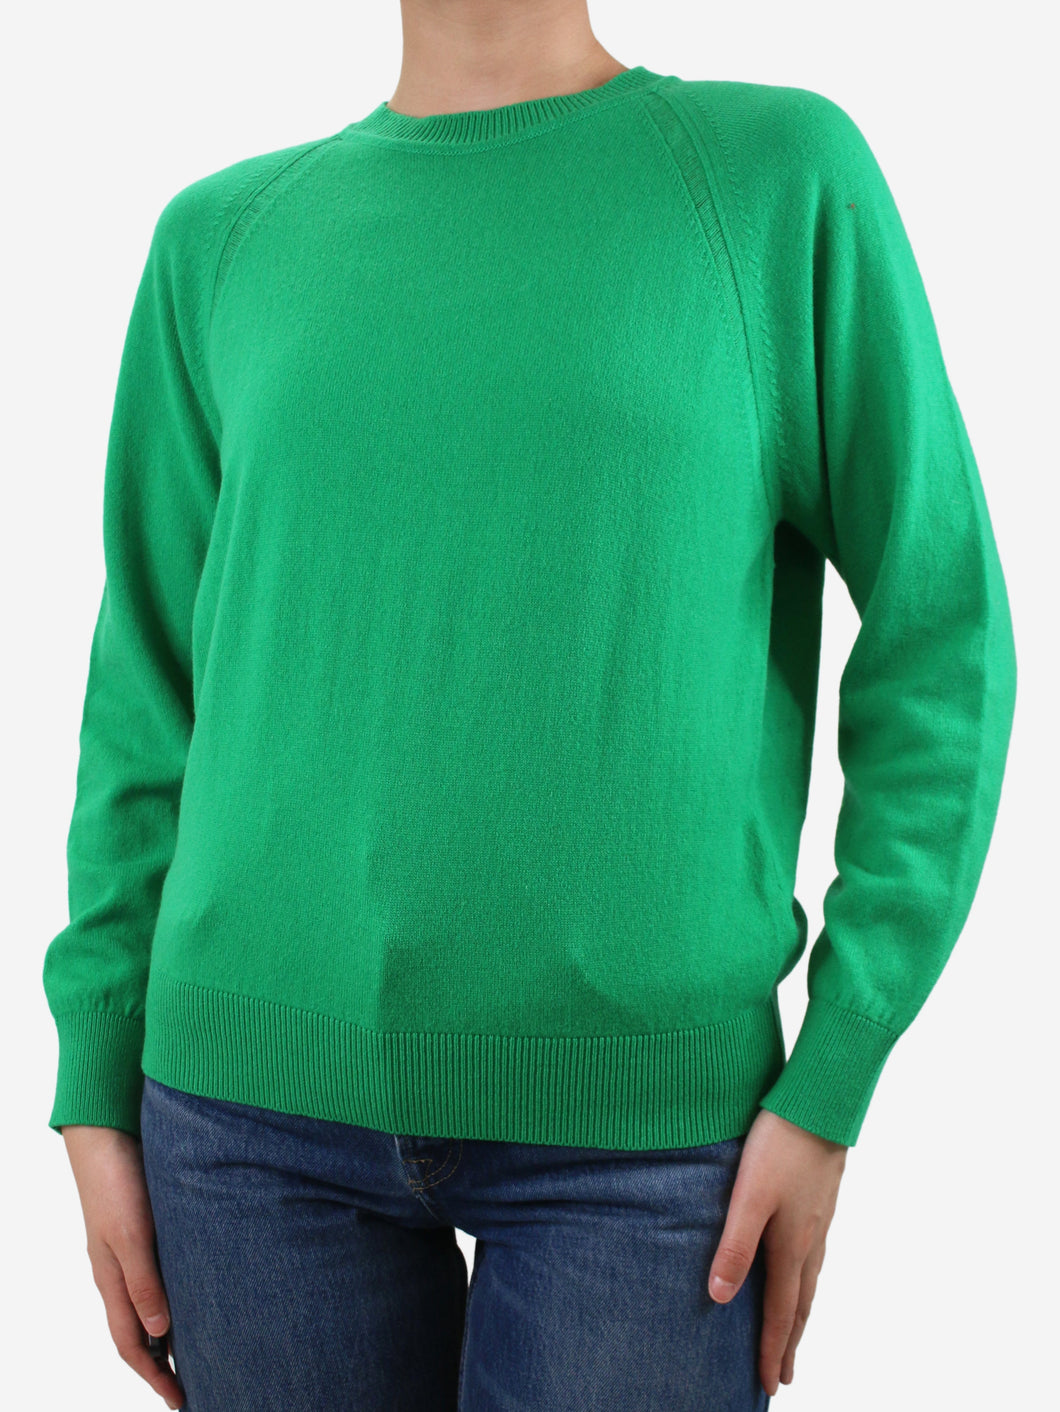 Green crewneck sweater - size S Knitwear Barrie 